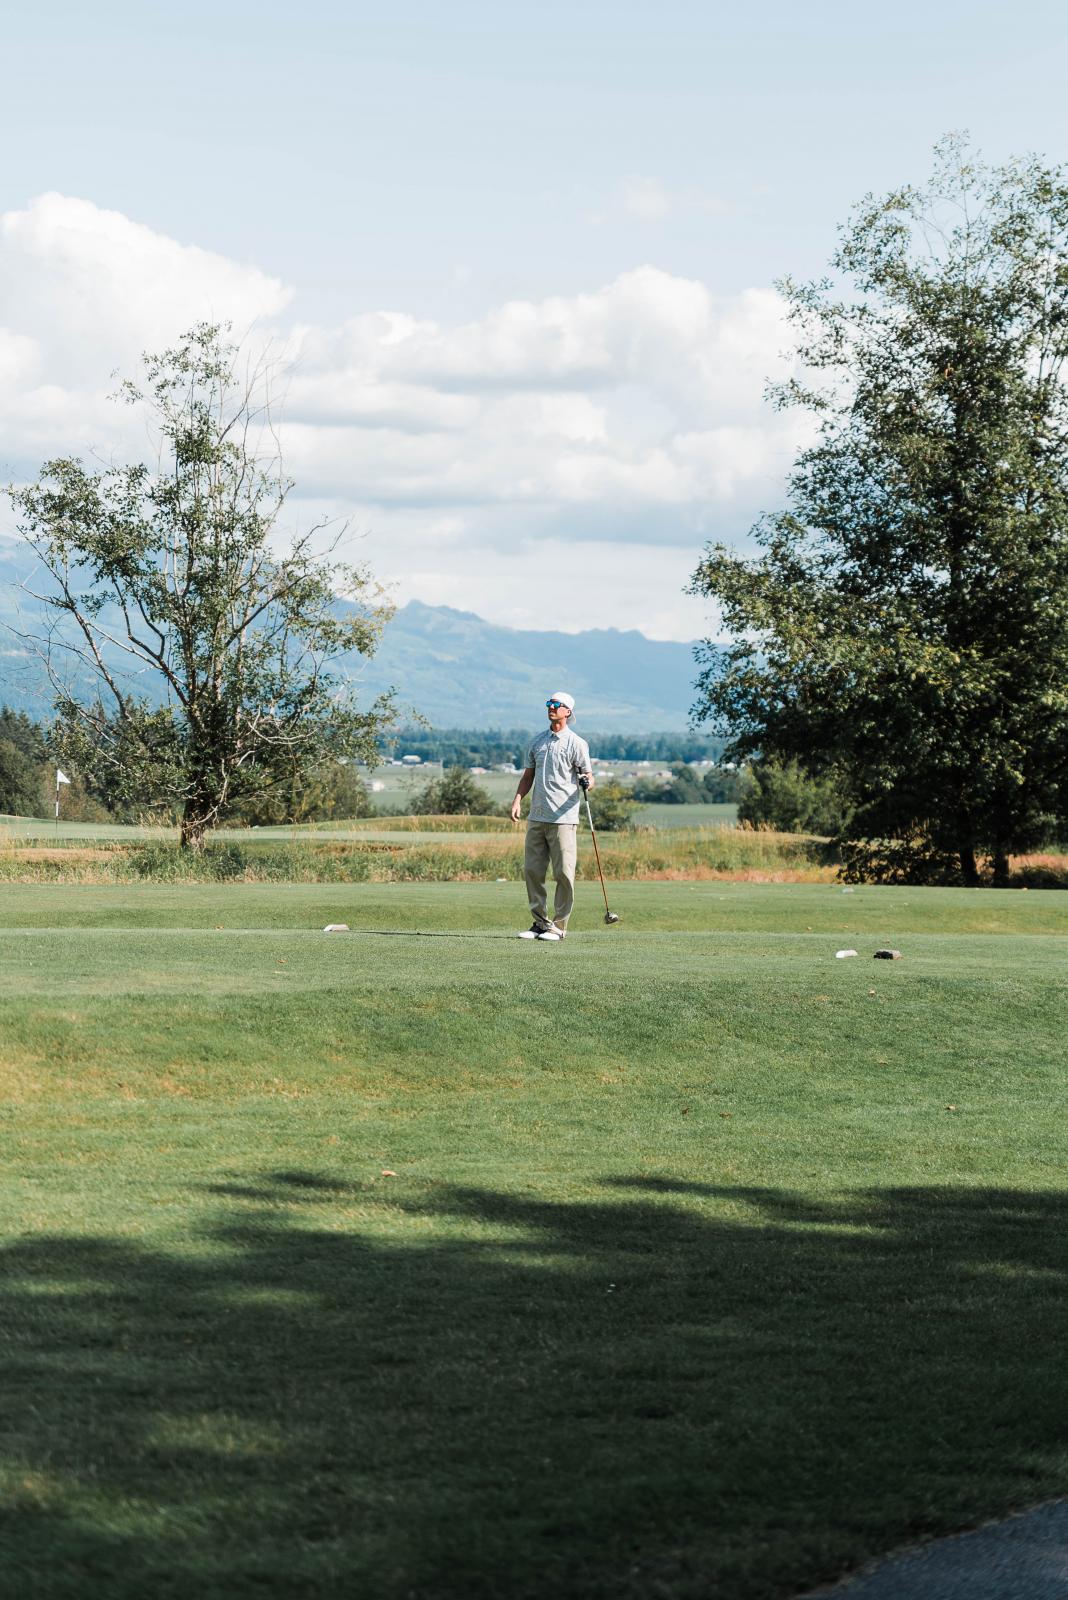 GolfTournament-93's image